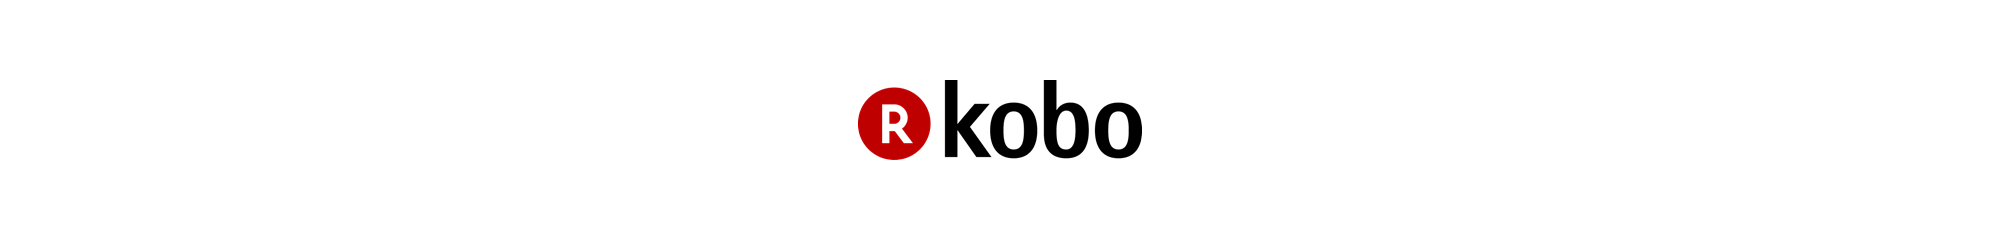 KOBO logo